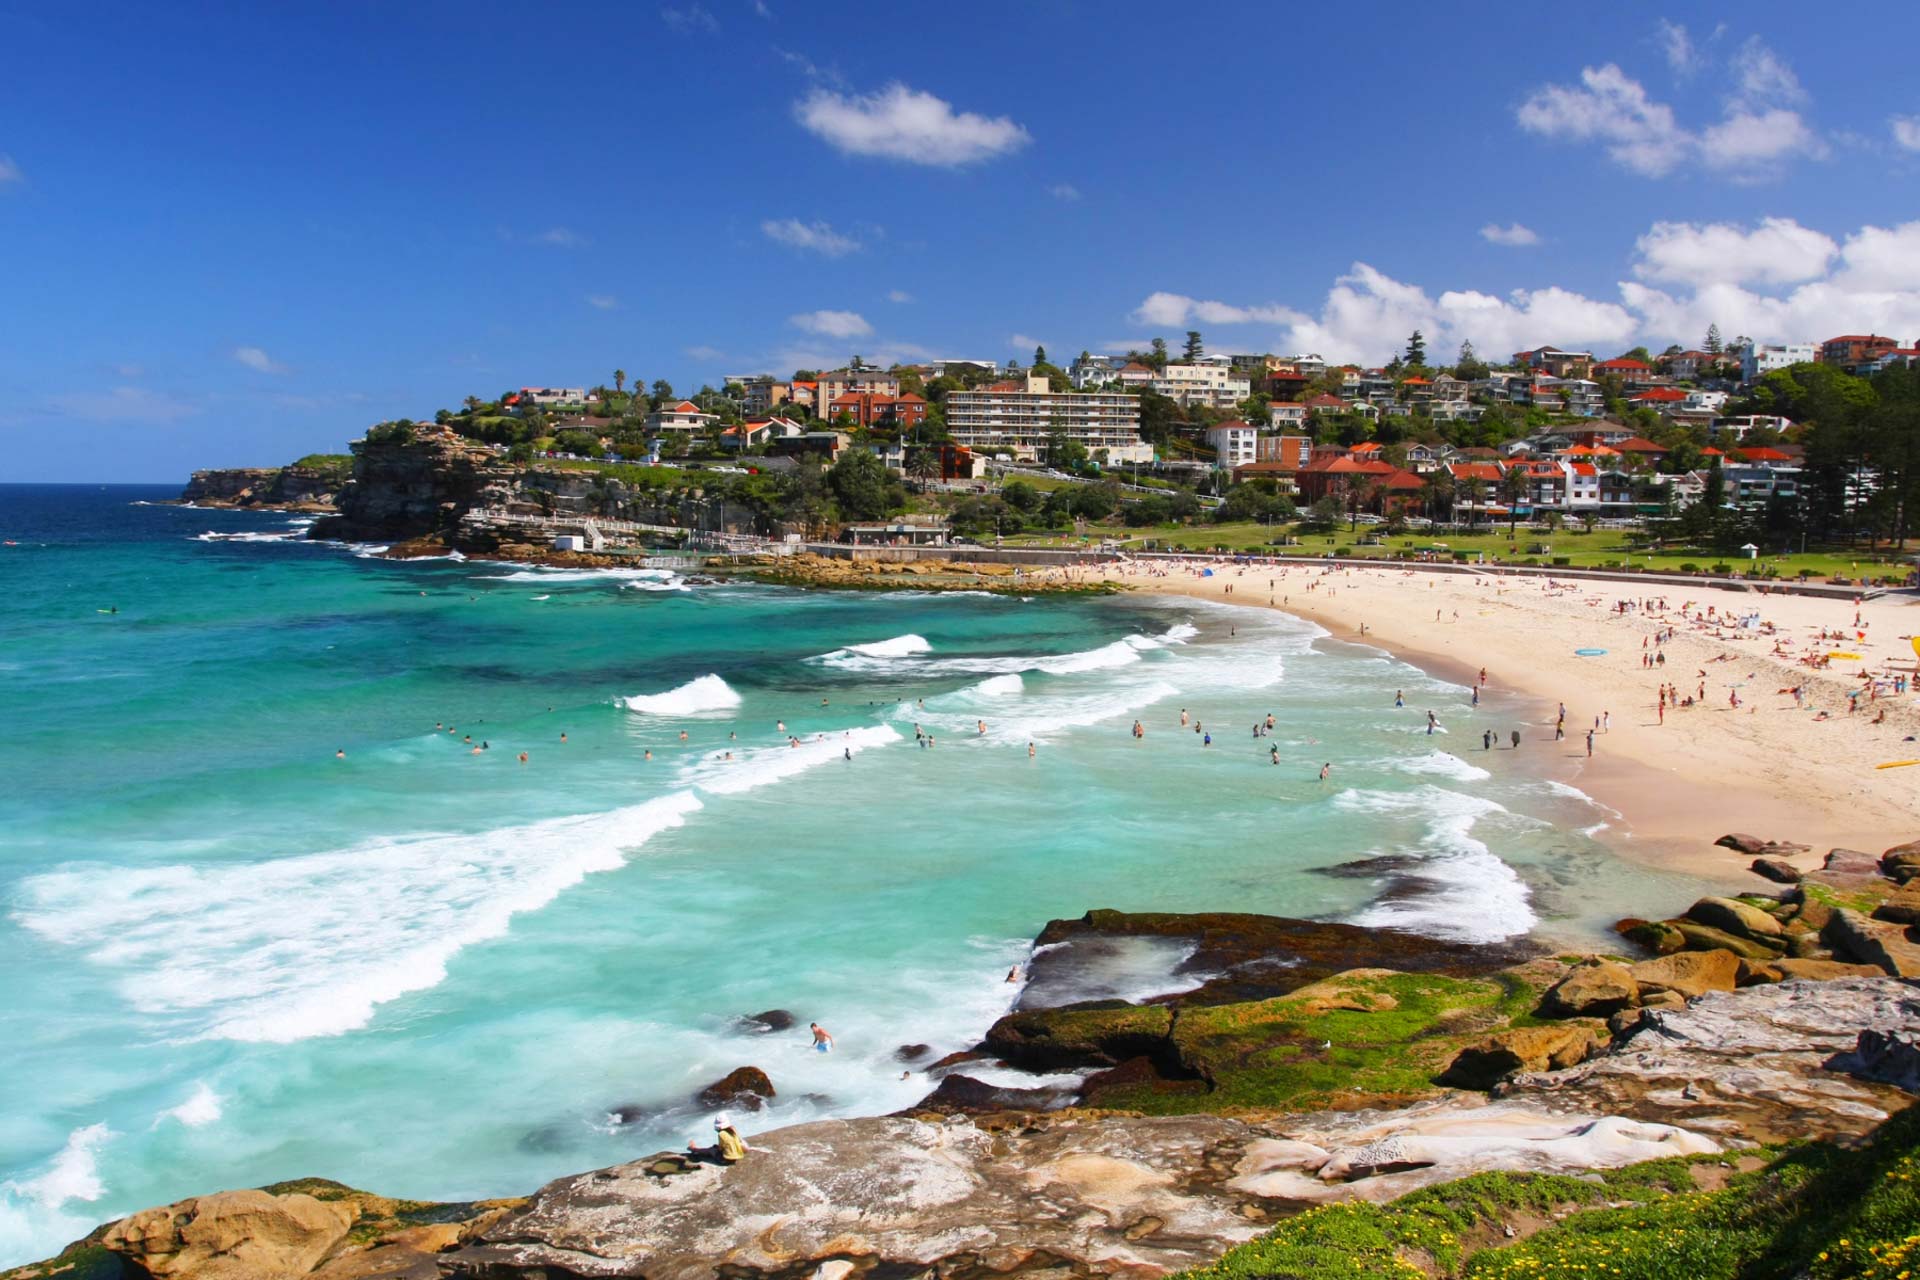 Town on hill rises behind beach in Australia.